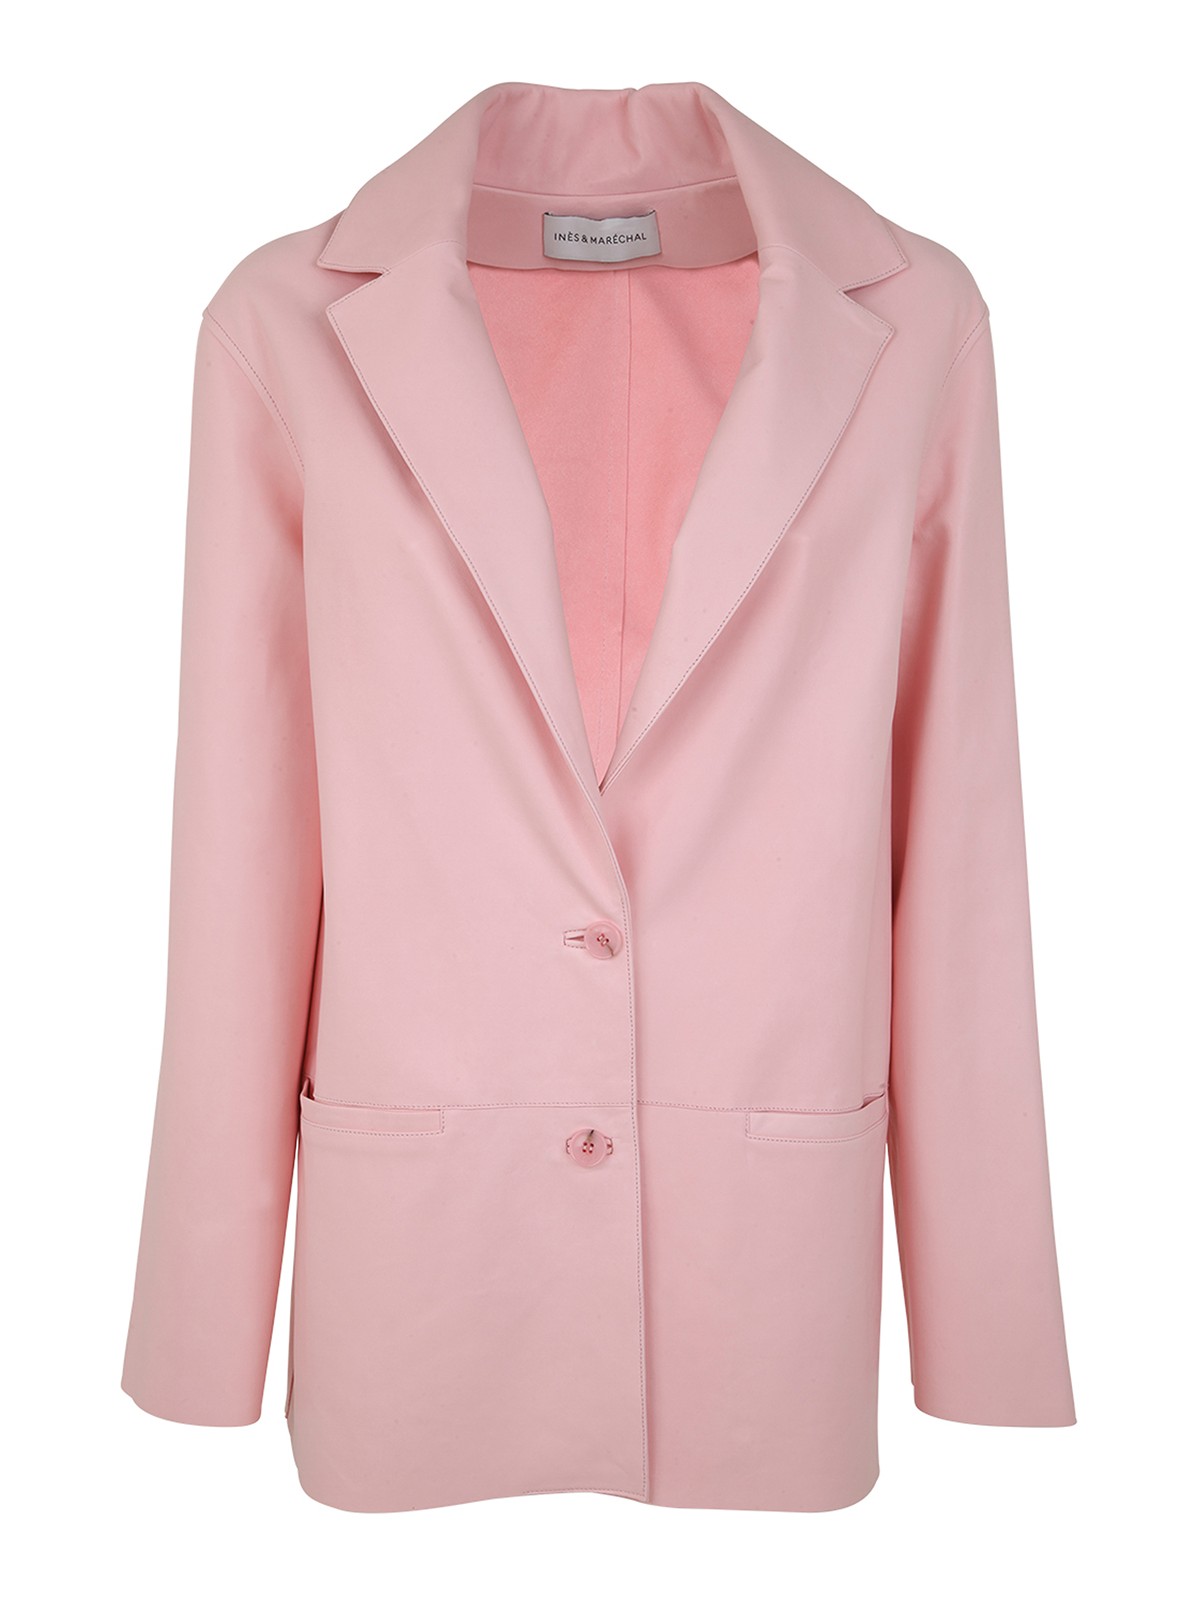 Ines Et Marechal Identite Oversized Jacket In Pink